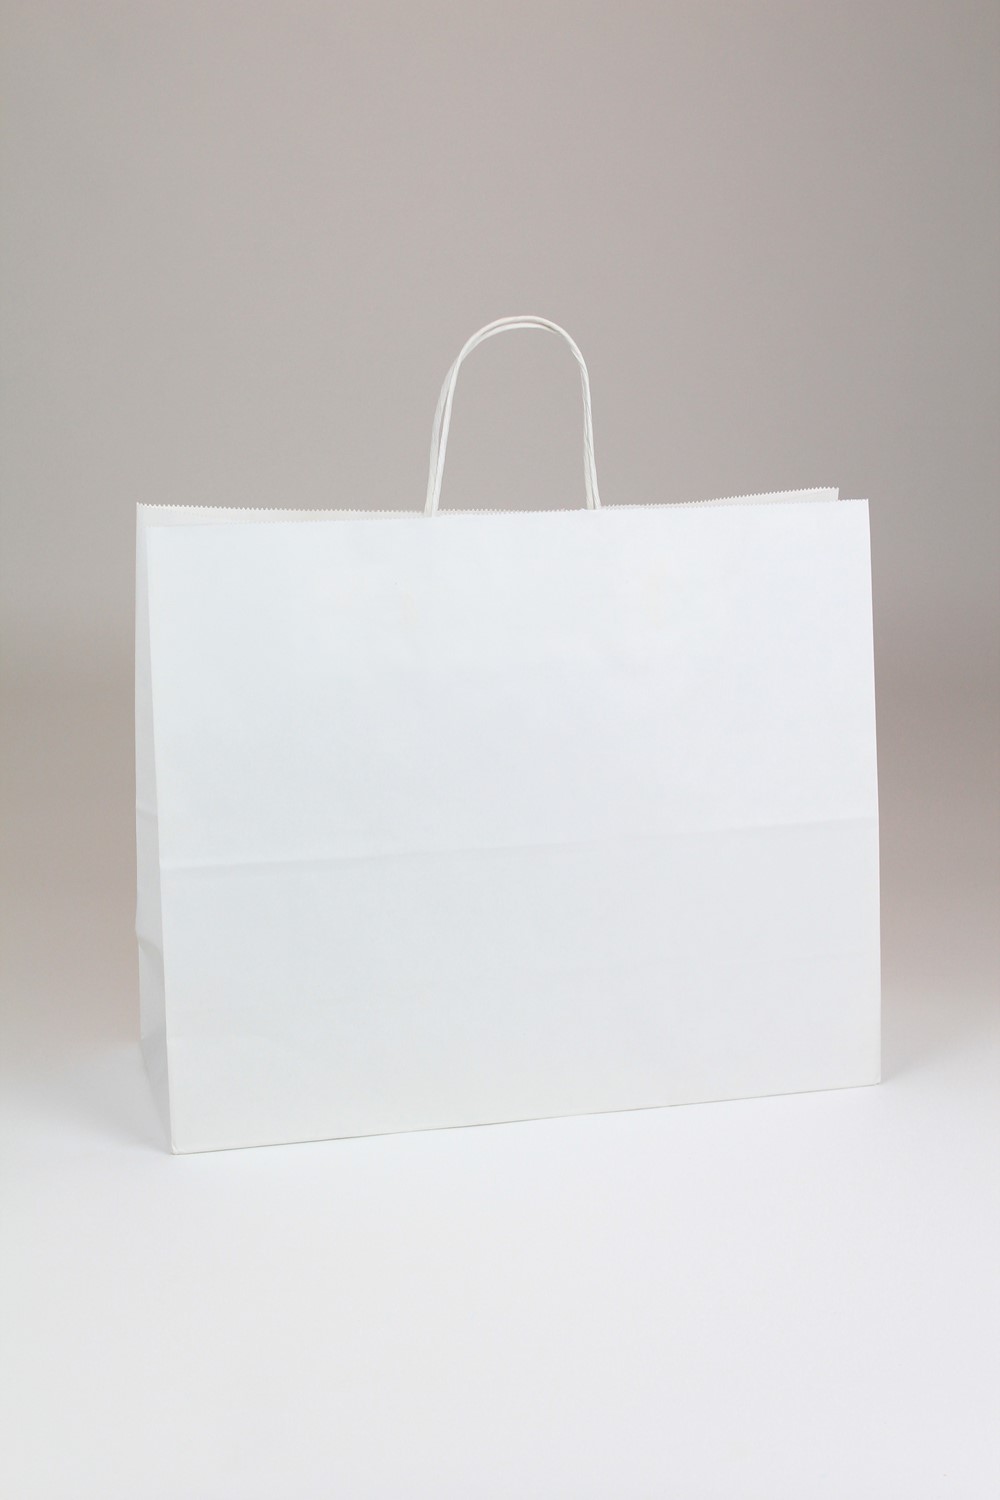 File:White paper bag.svg - Wikimedia Commons